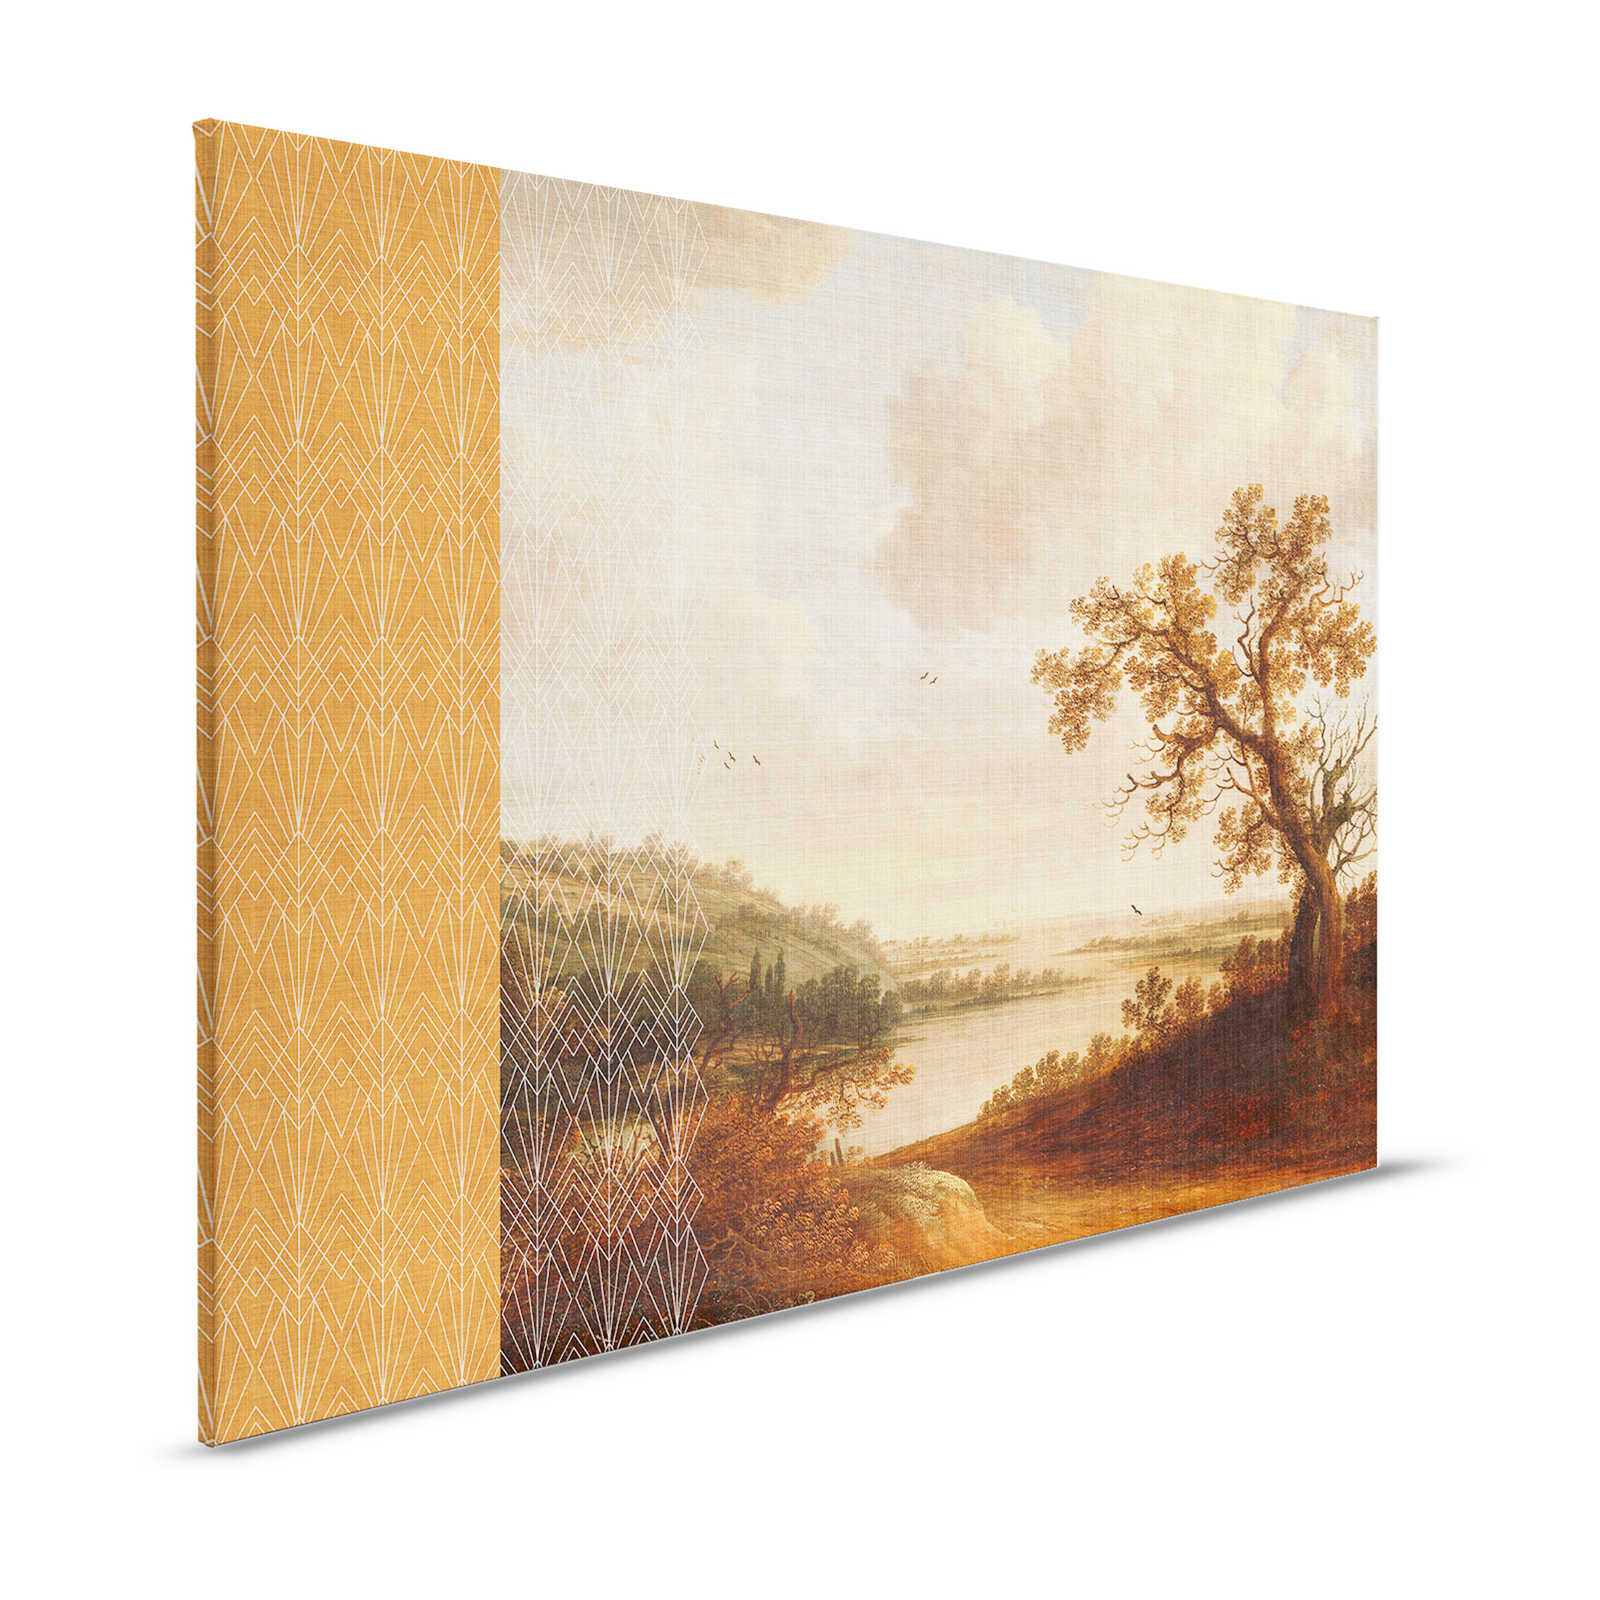 Cortina 1 - Yellow Canvas Painting Art Mix Painting & Graphic Pattern - 1.20 m x 0.80 m
